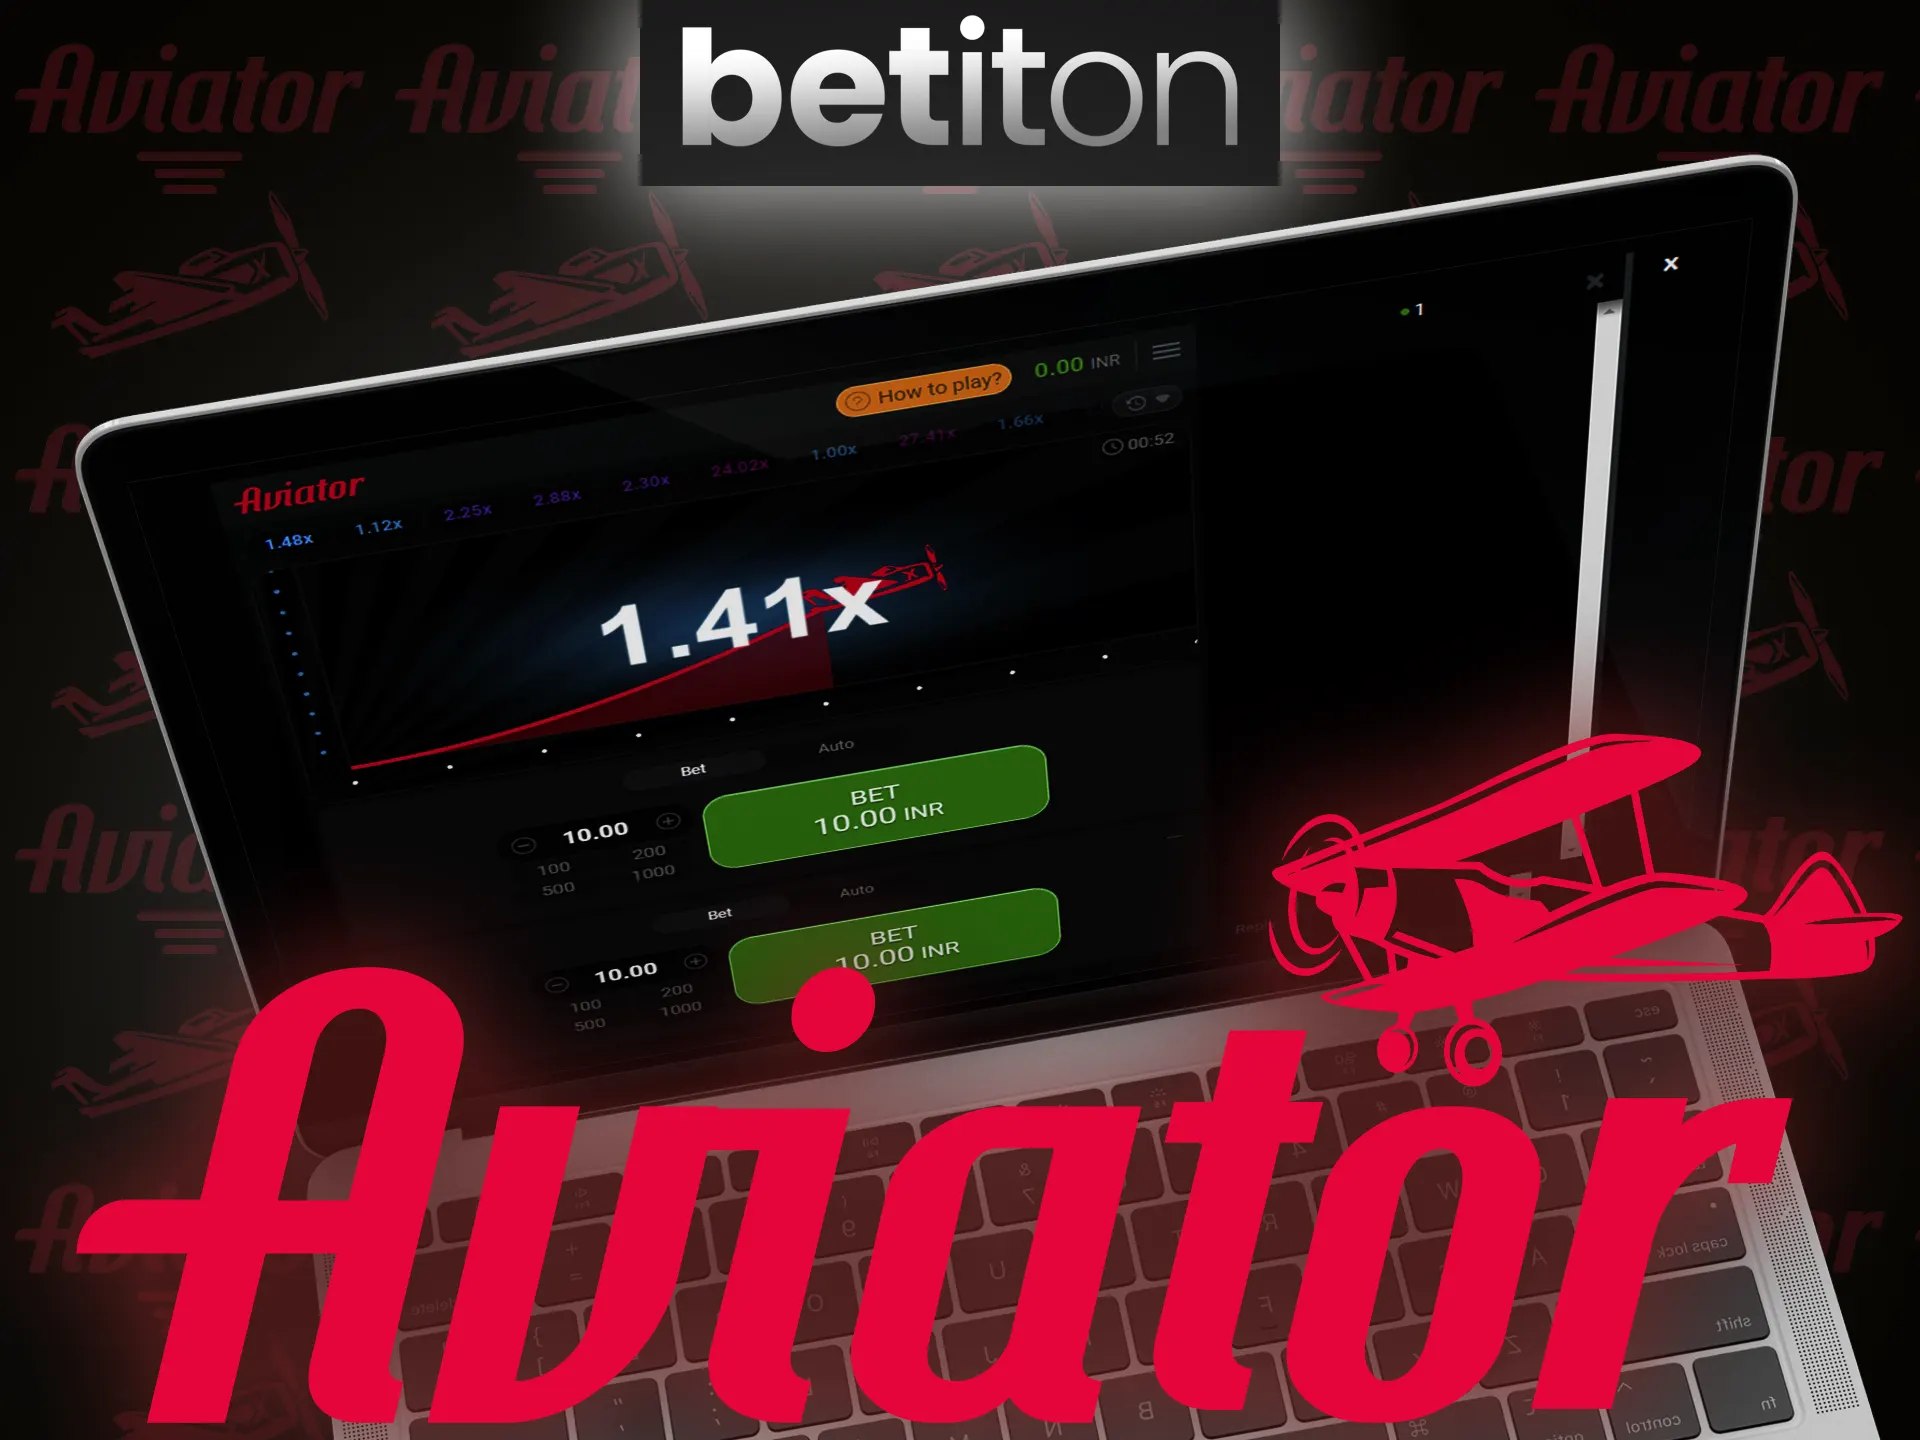 Play Aviator game at the Betiton casino.